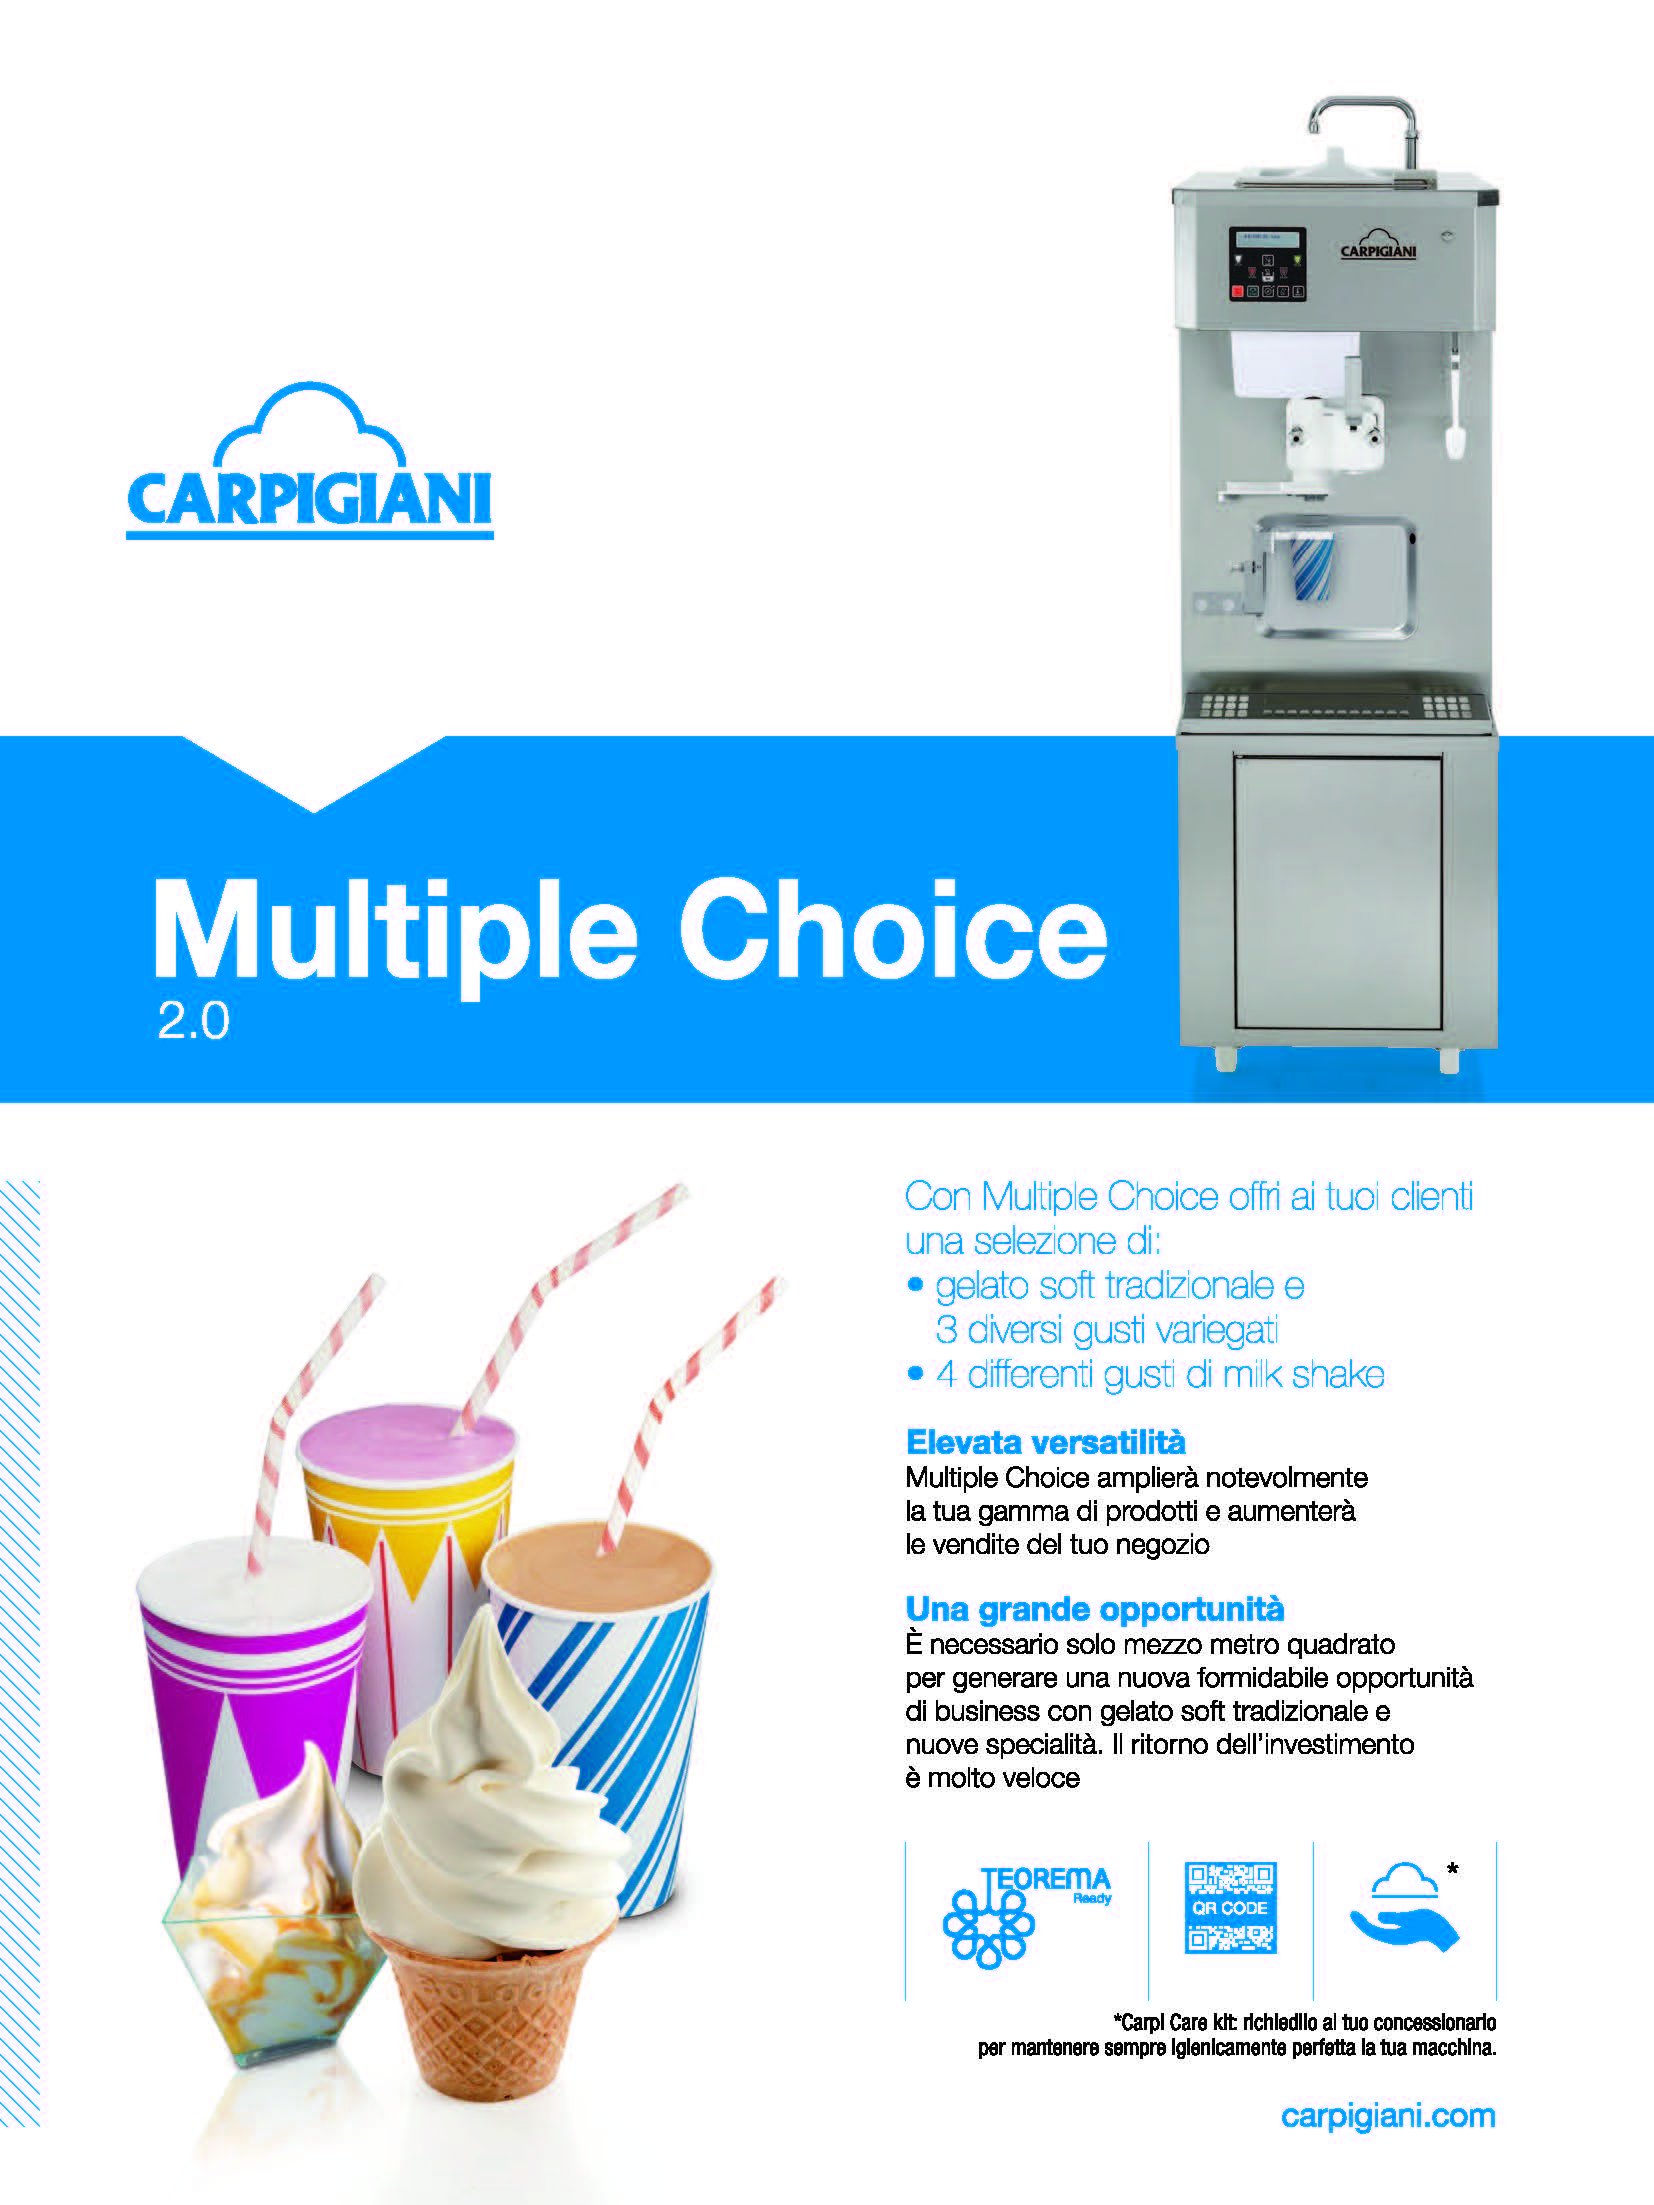 Carpigiani – Multiple Choice